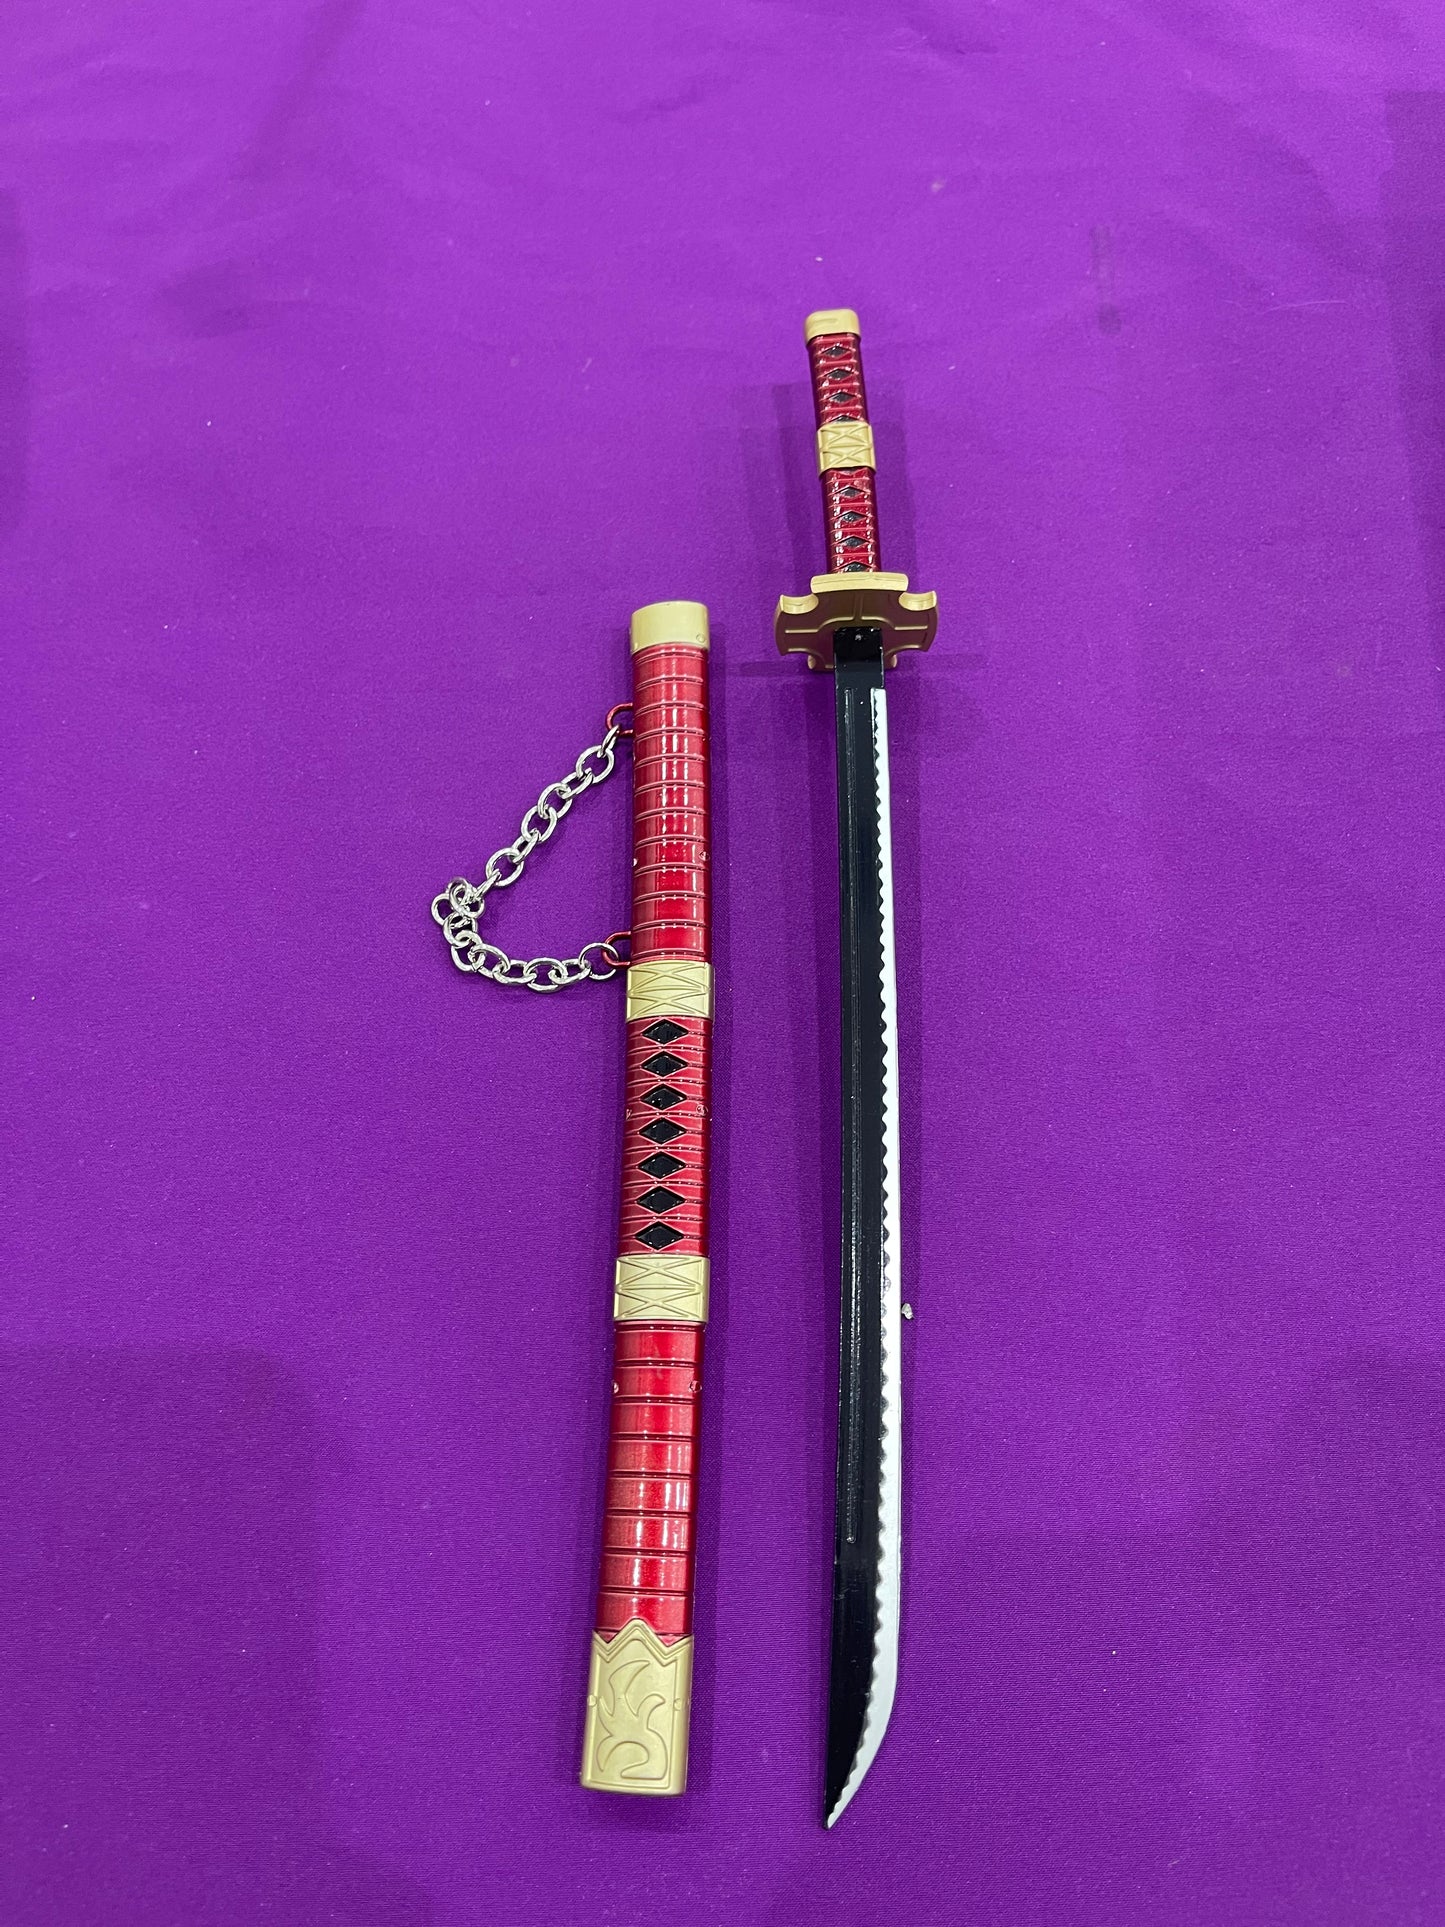 Zoro red sword keychain